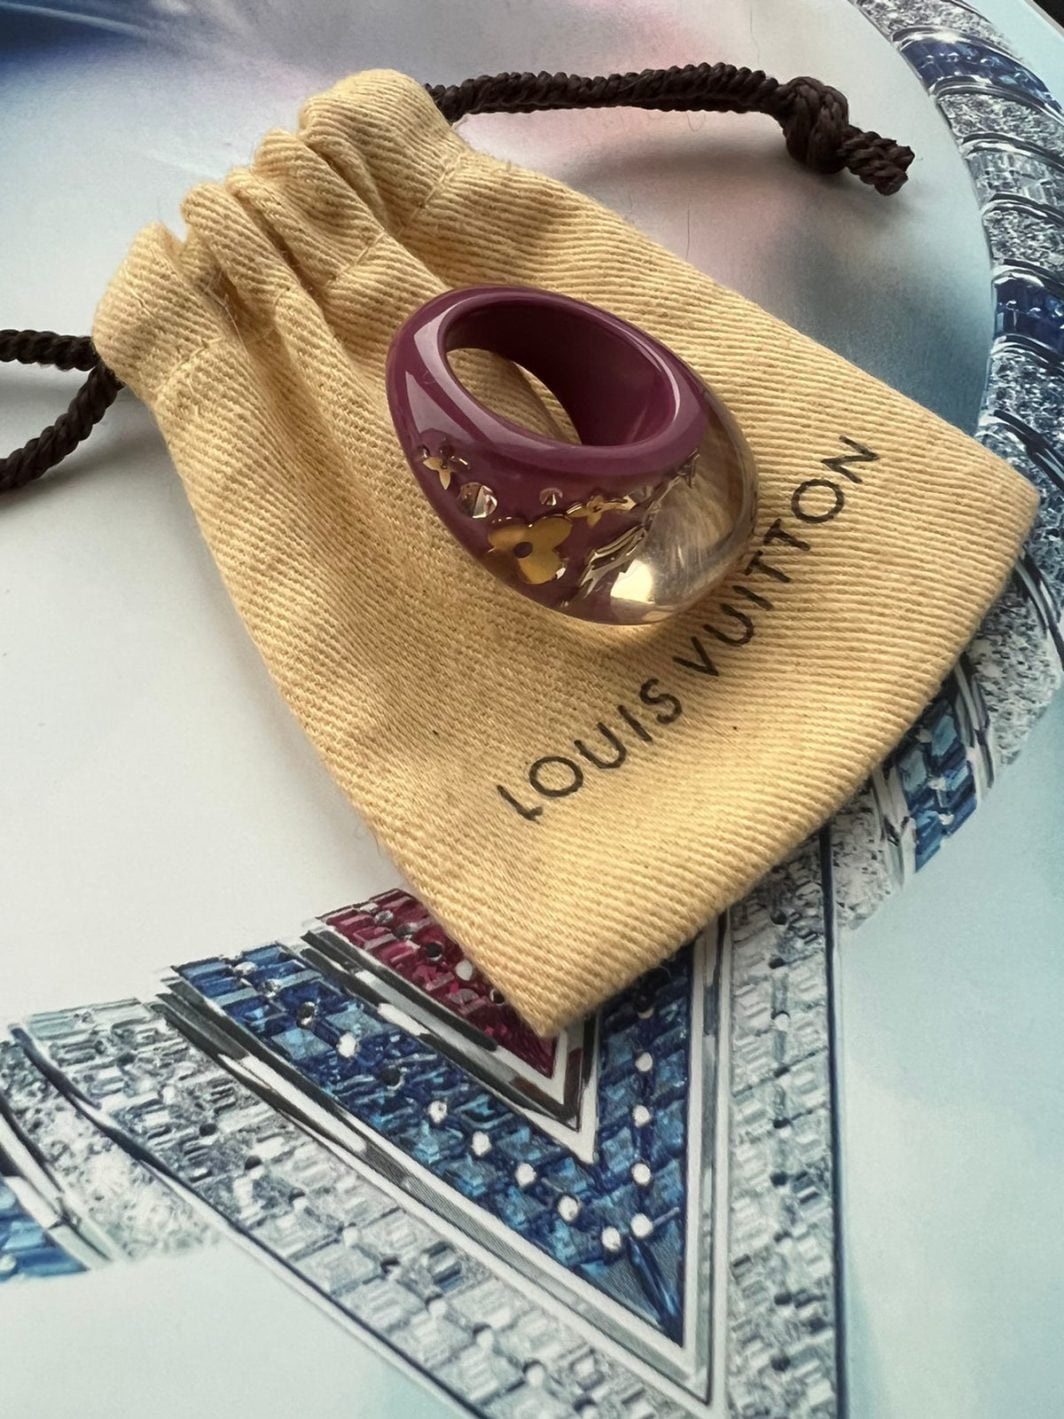 Кольцо Louis Vuitton оригинал